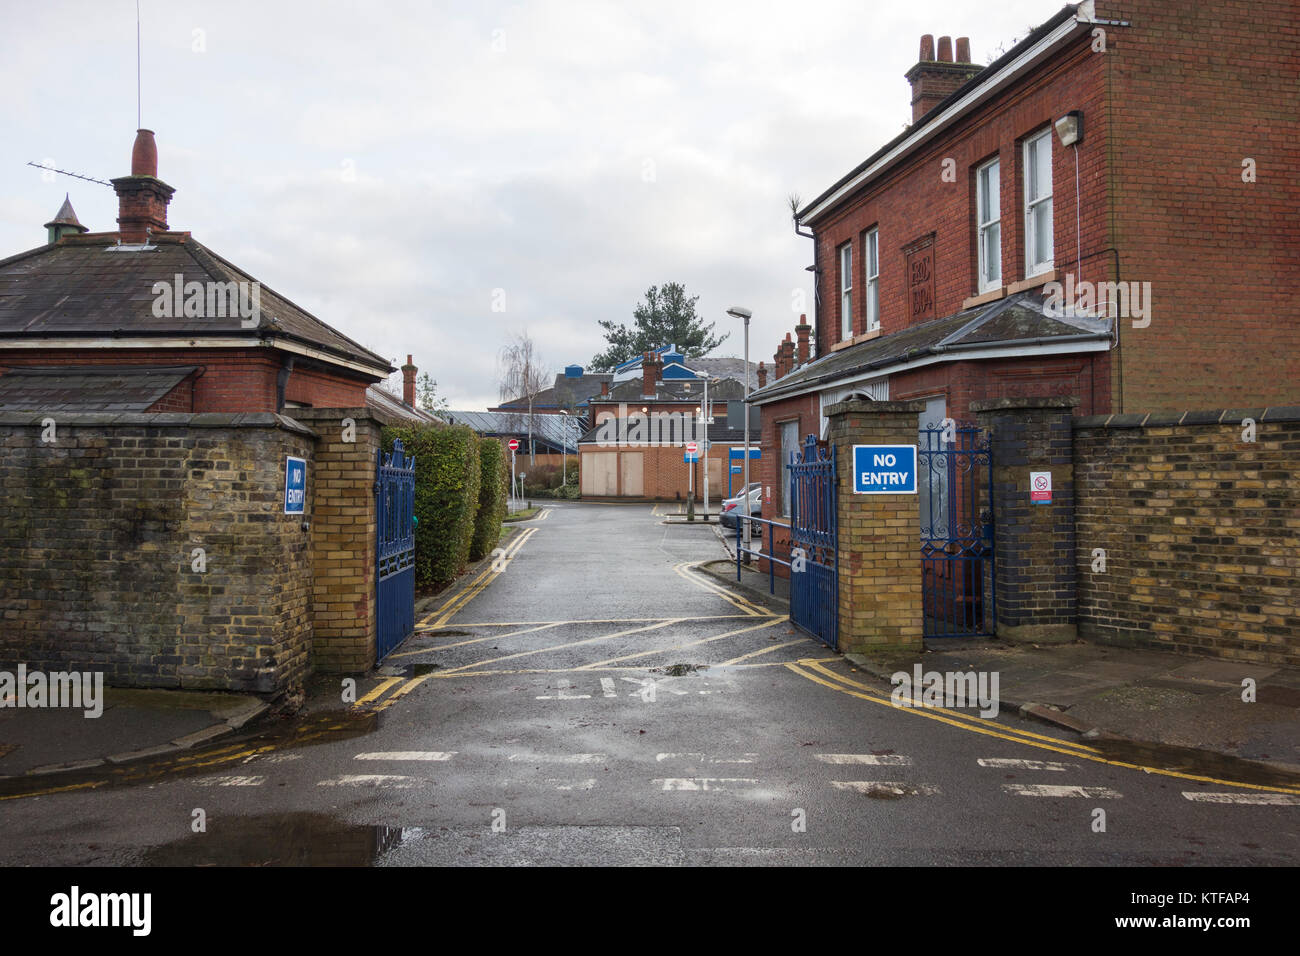 Barnes Hospital, South Worple Way, East Sheen, London Borough of Richmond upon Thames, UK Stock Photo